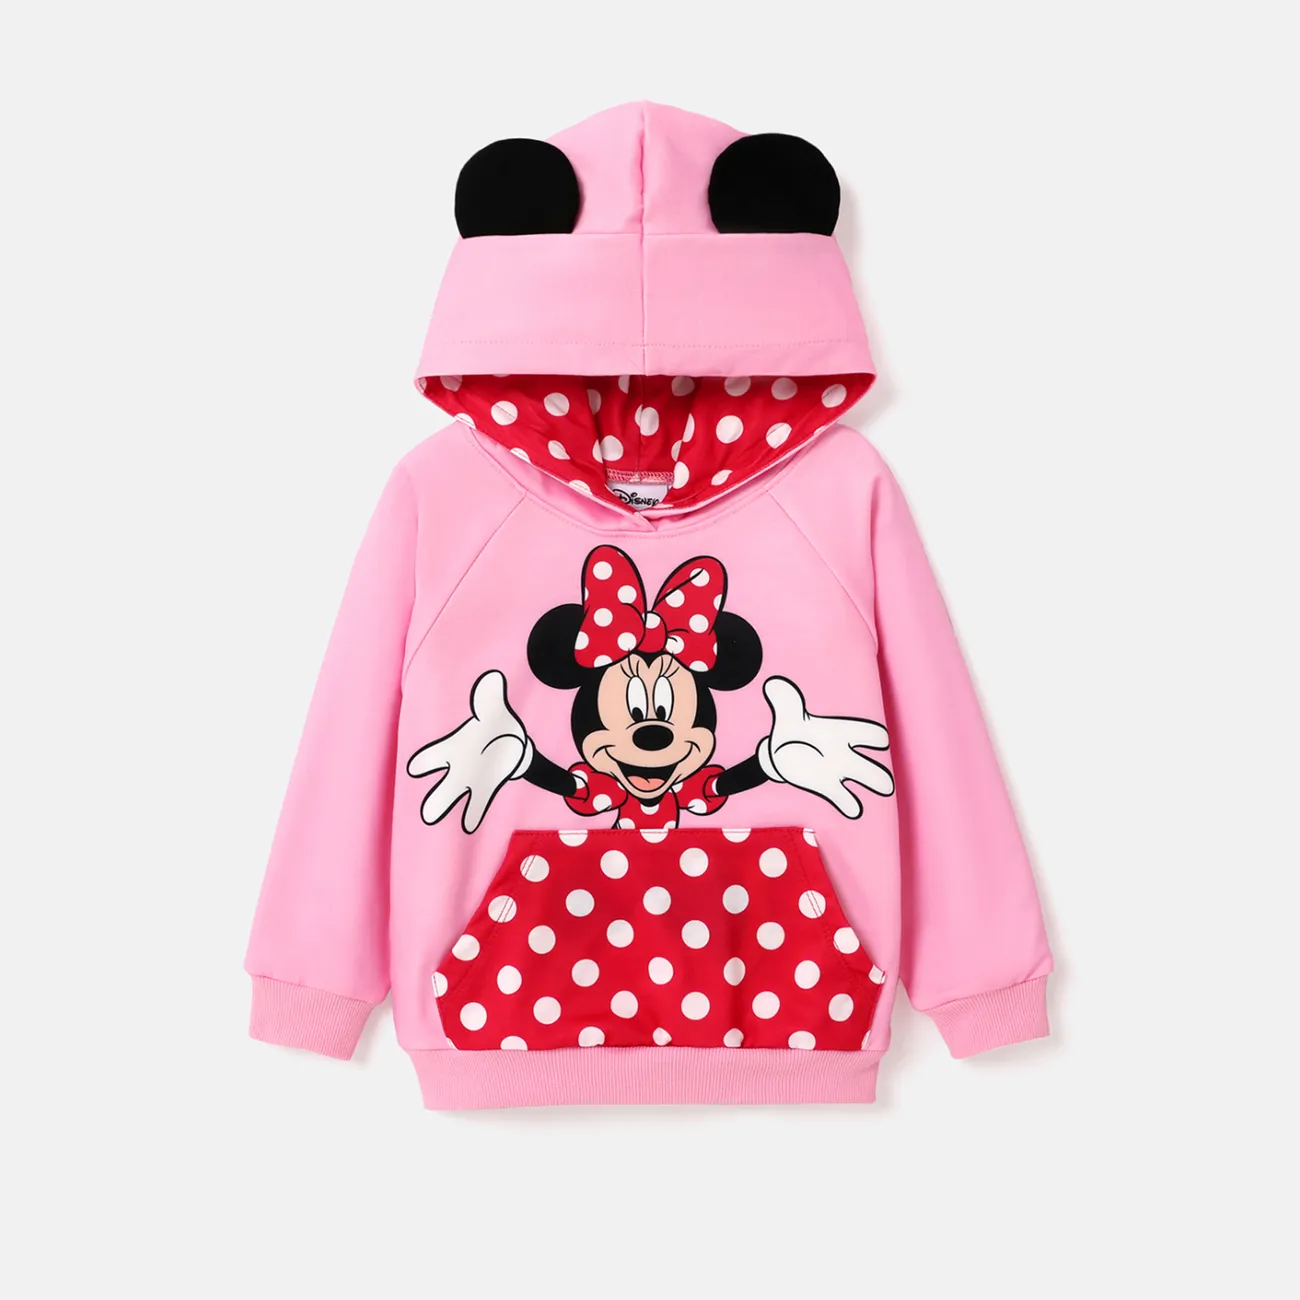 Disney Mickey and Friends Kleinkinder Unisex Hypertaktil Kindlich Sweatshirts rosa big image 1